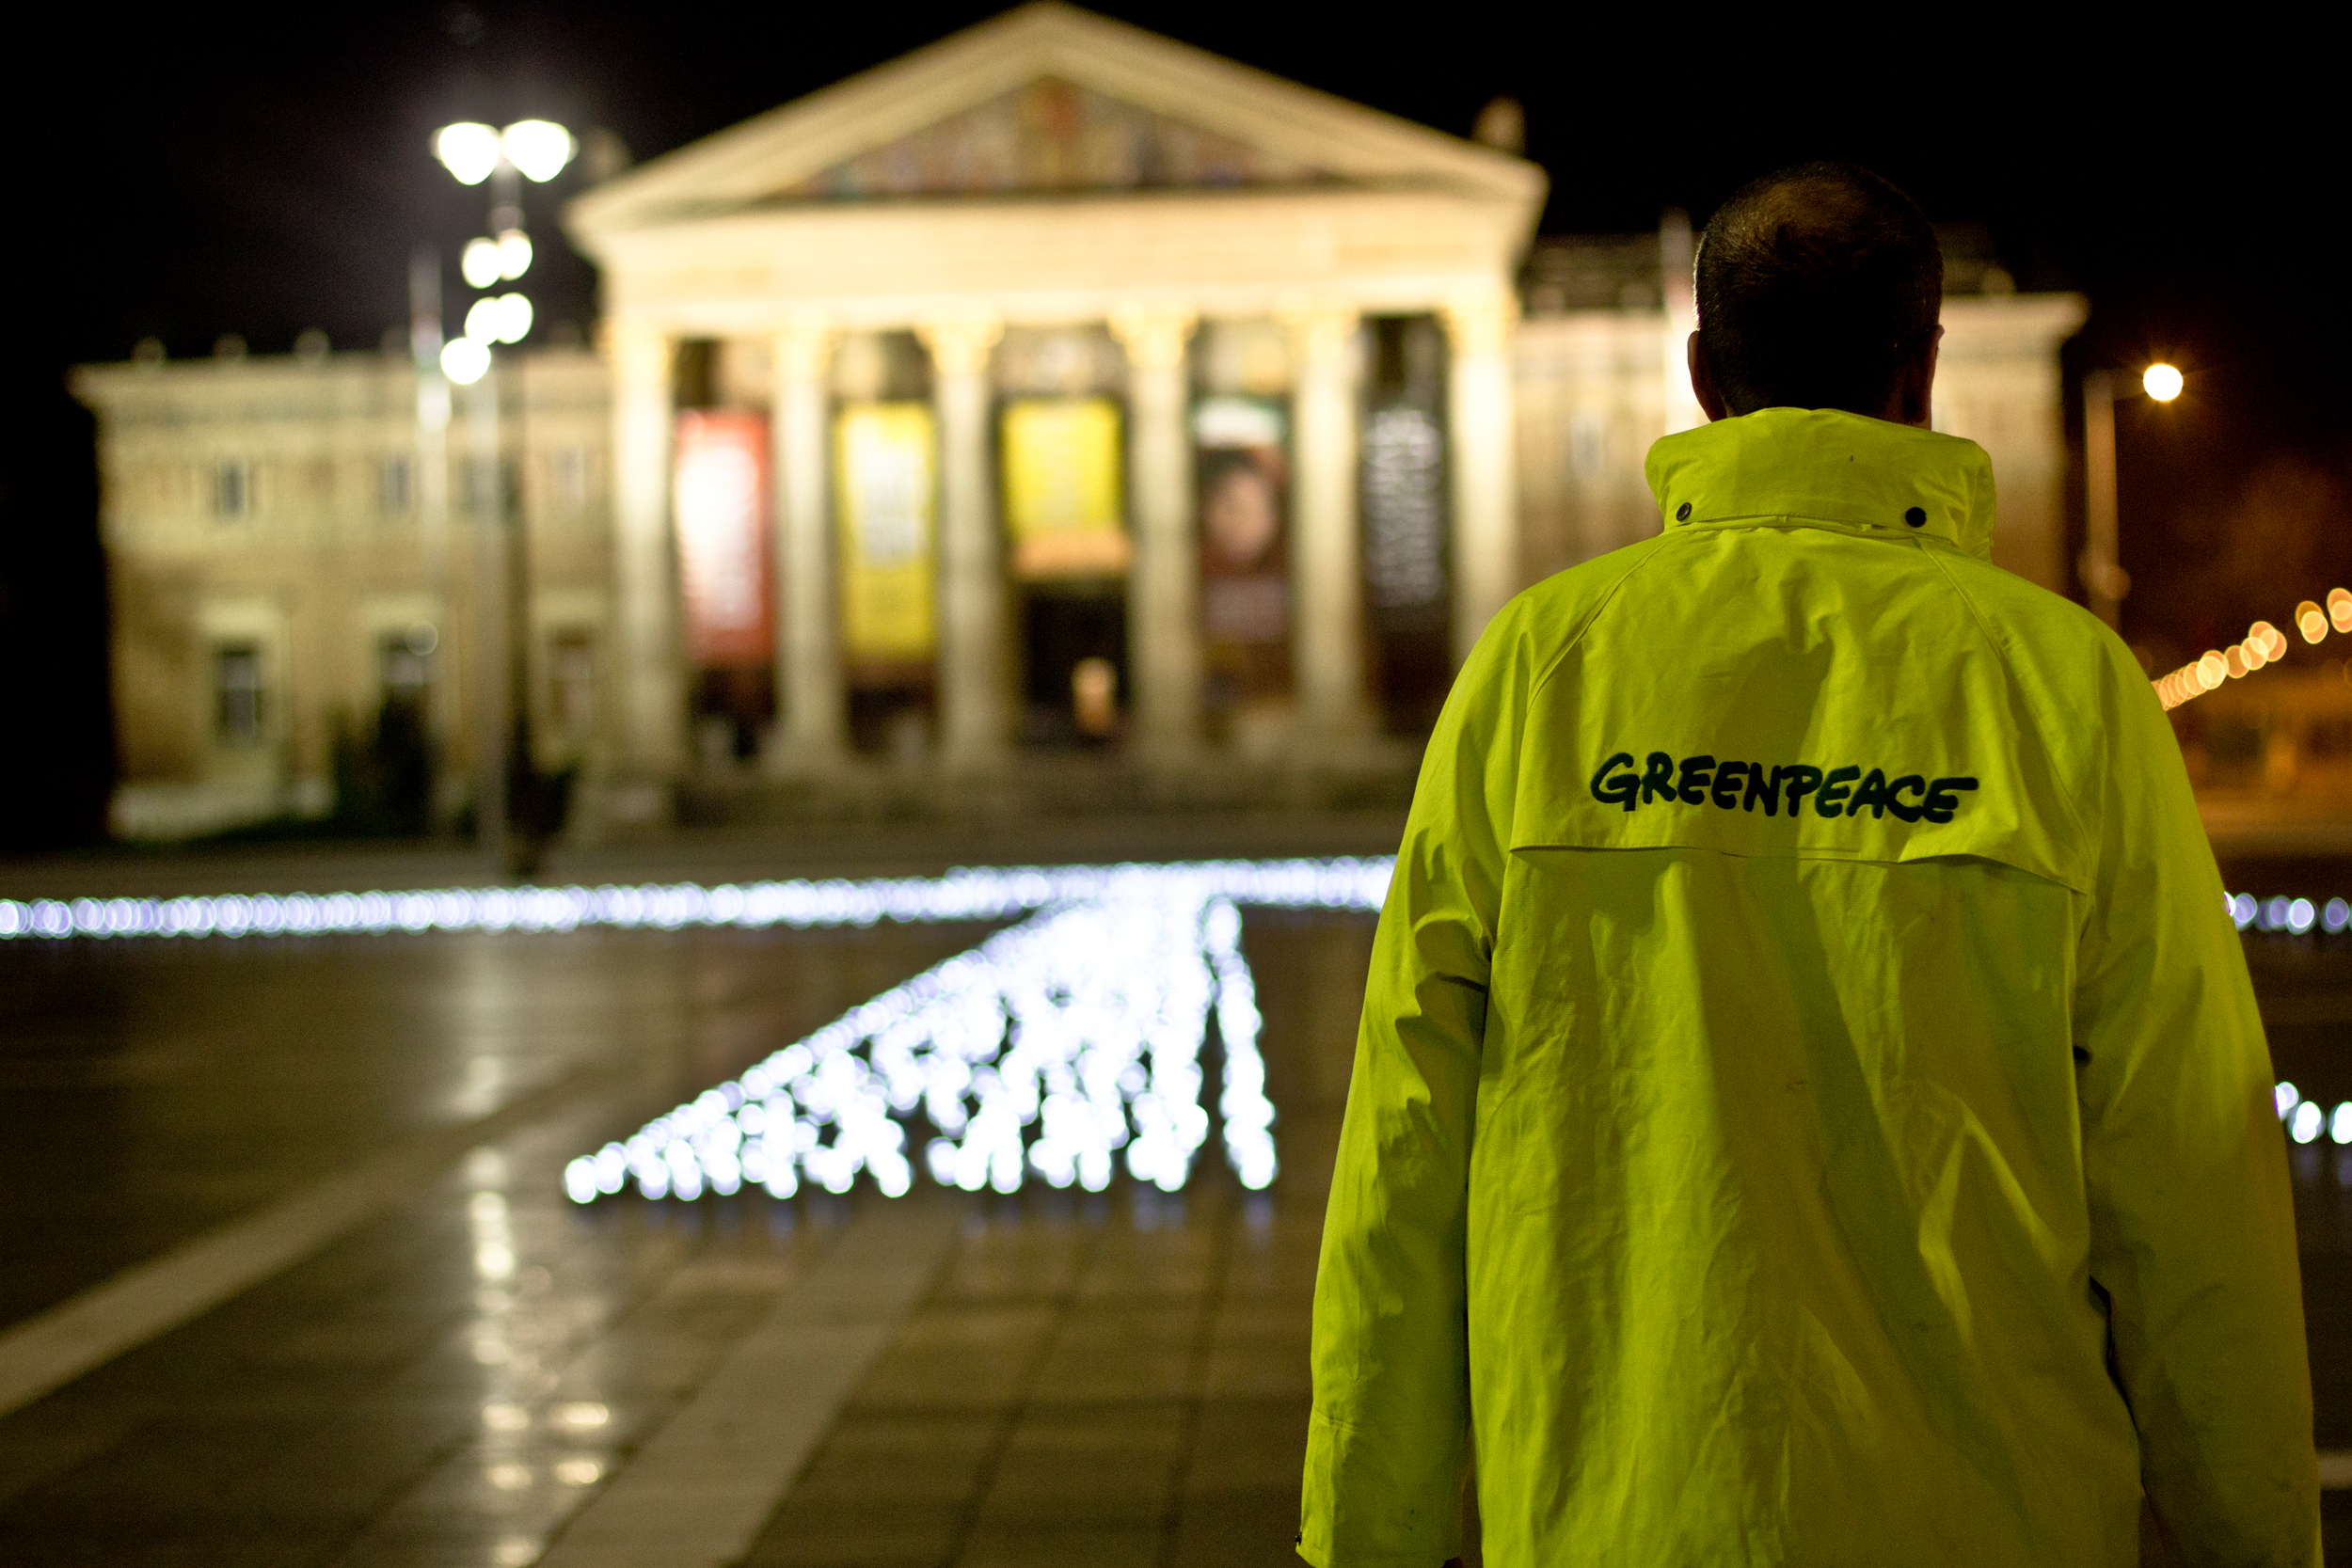 Leave a legacy - Greenpeace International